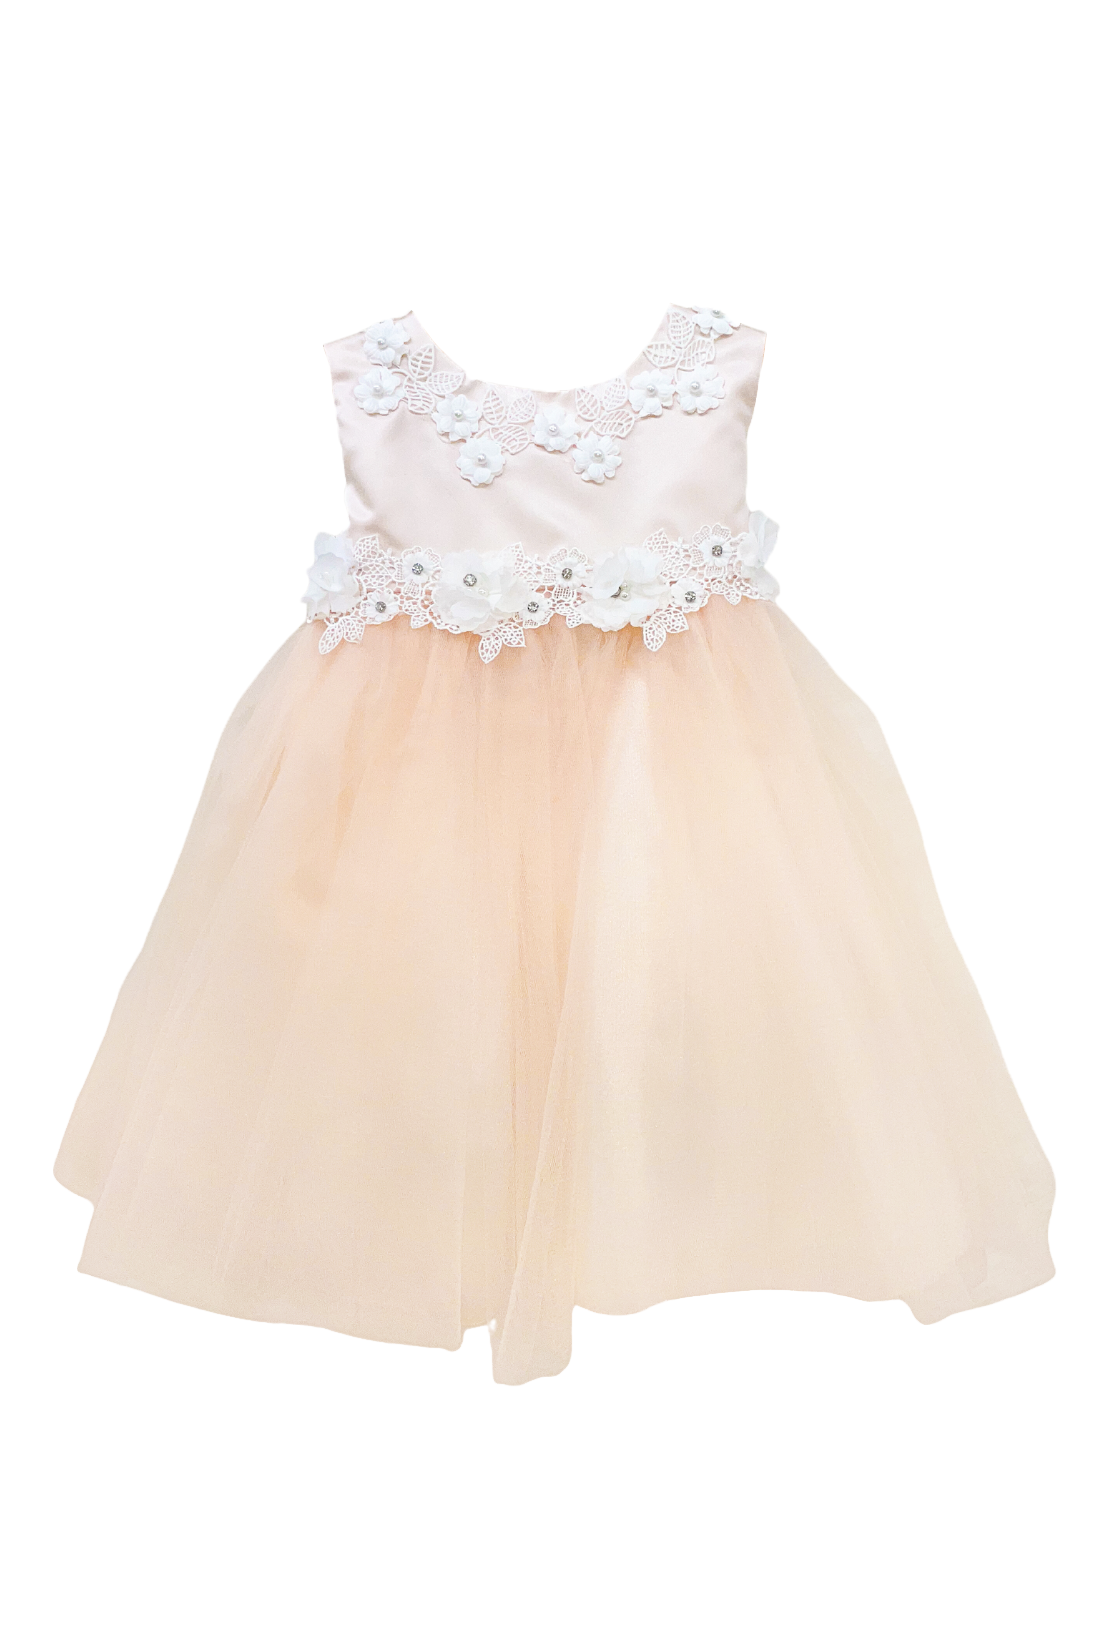 534 Princess Ballgown Baby Dress with Floral Trim – Kid's Dream Wholesale